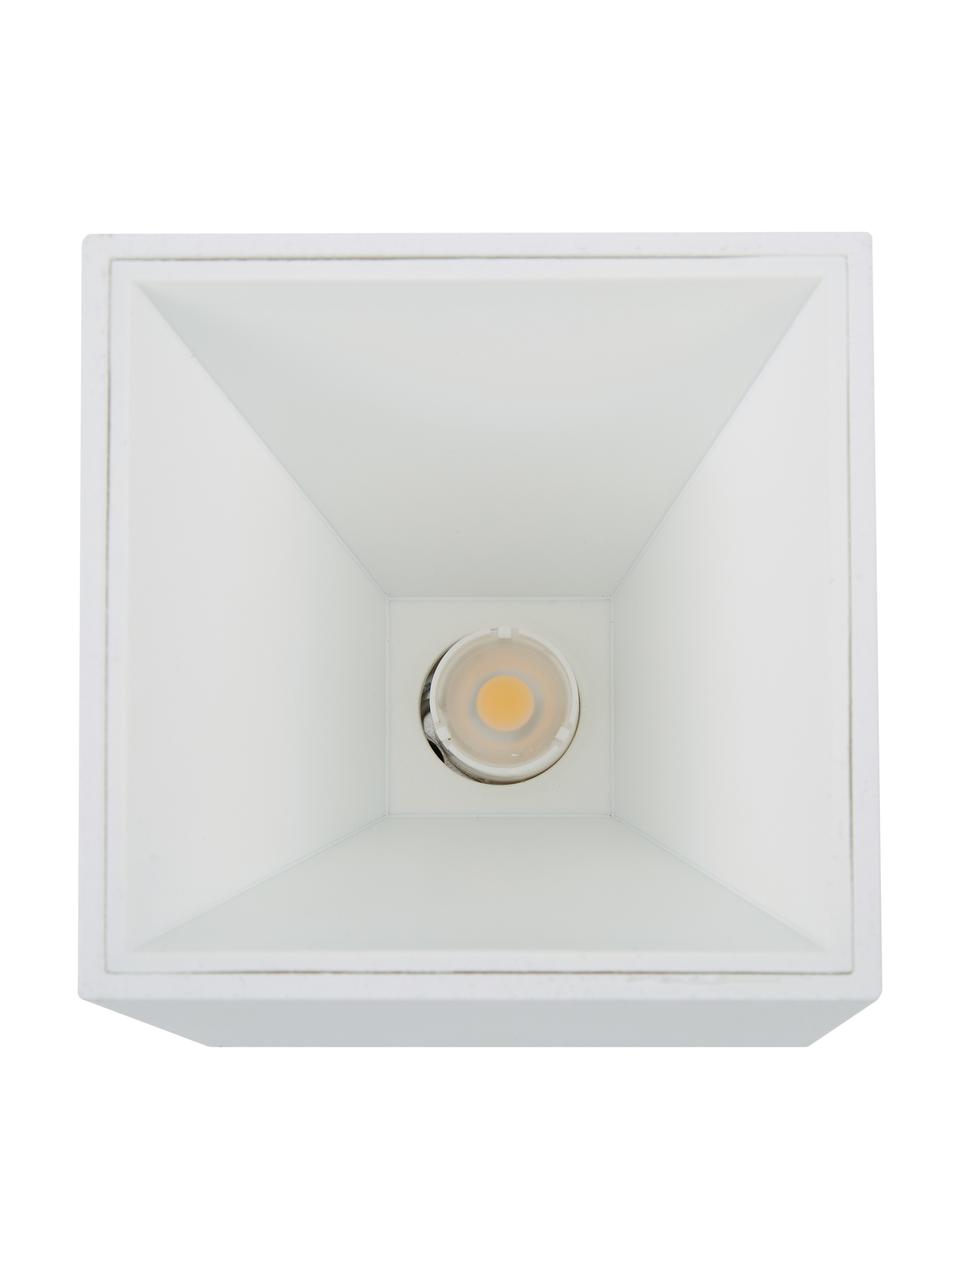 Lampa spot LED Marty, Biały, S 10 x W 12 cm